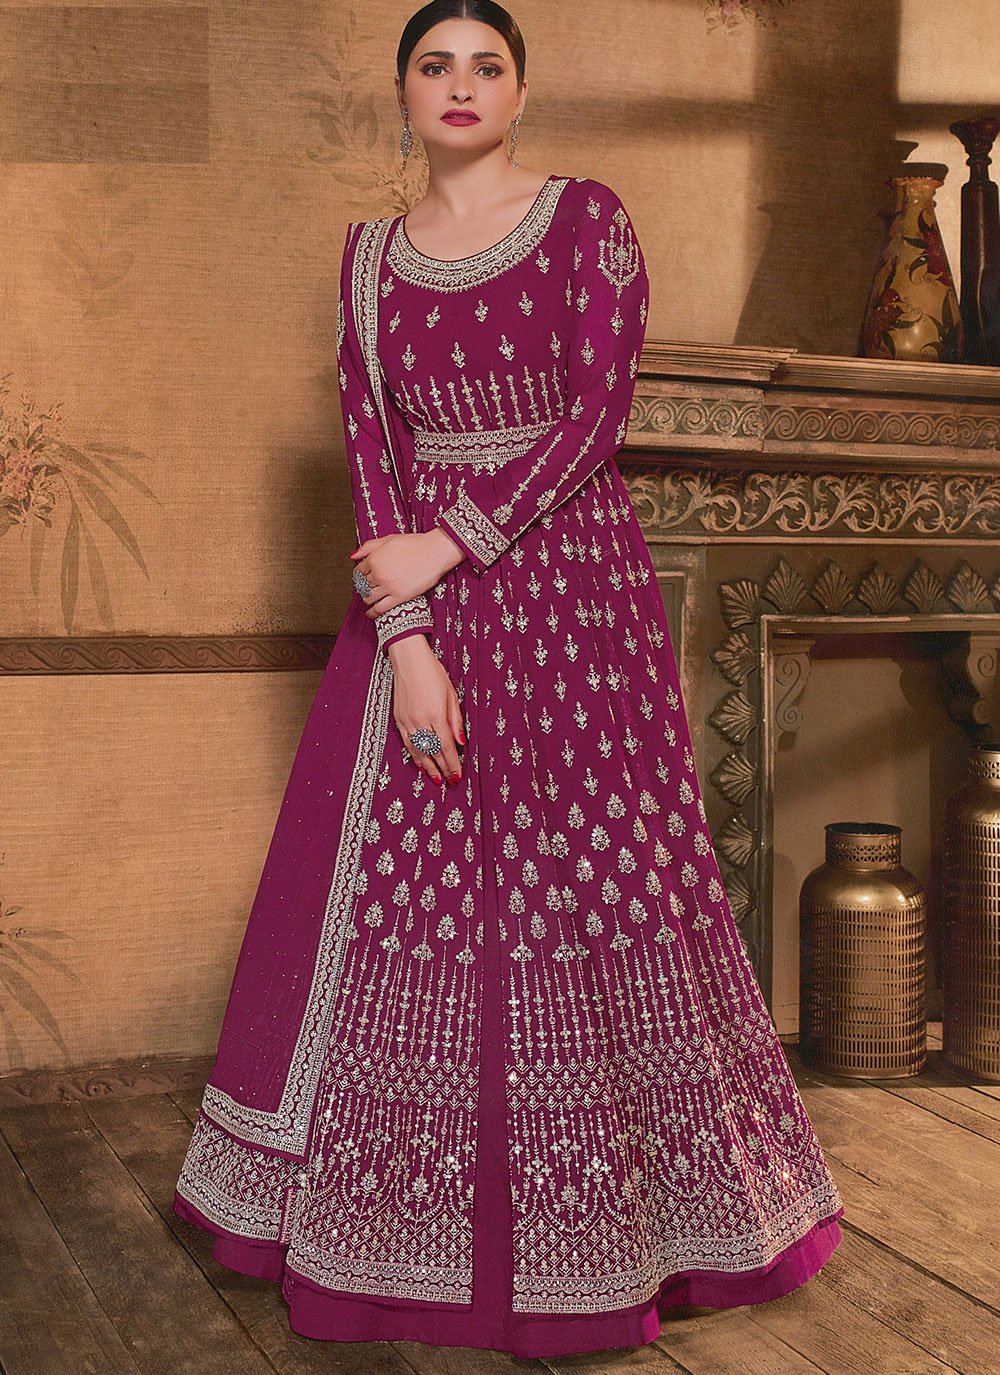 Beautiful chiffon dress in dark shoking pink color by imrozia Model# C 1224  | Chiffon dress, Dress, Ready to wear